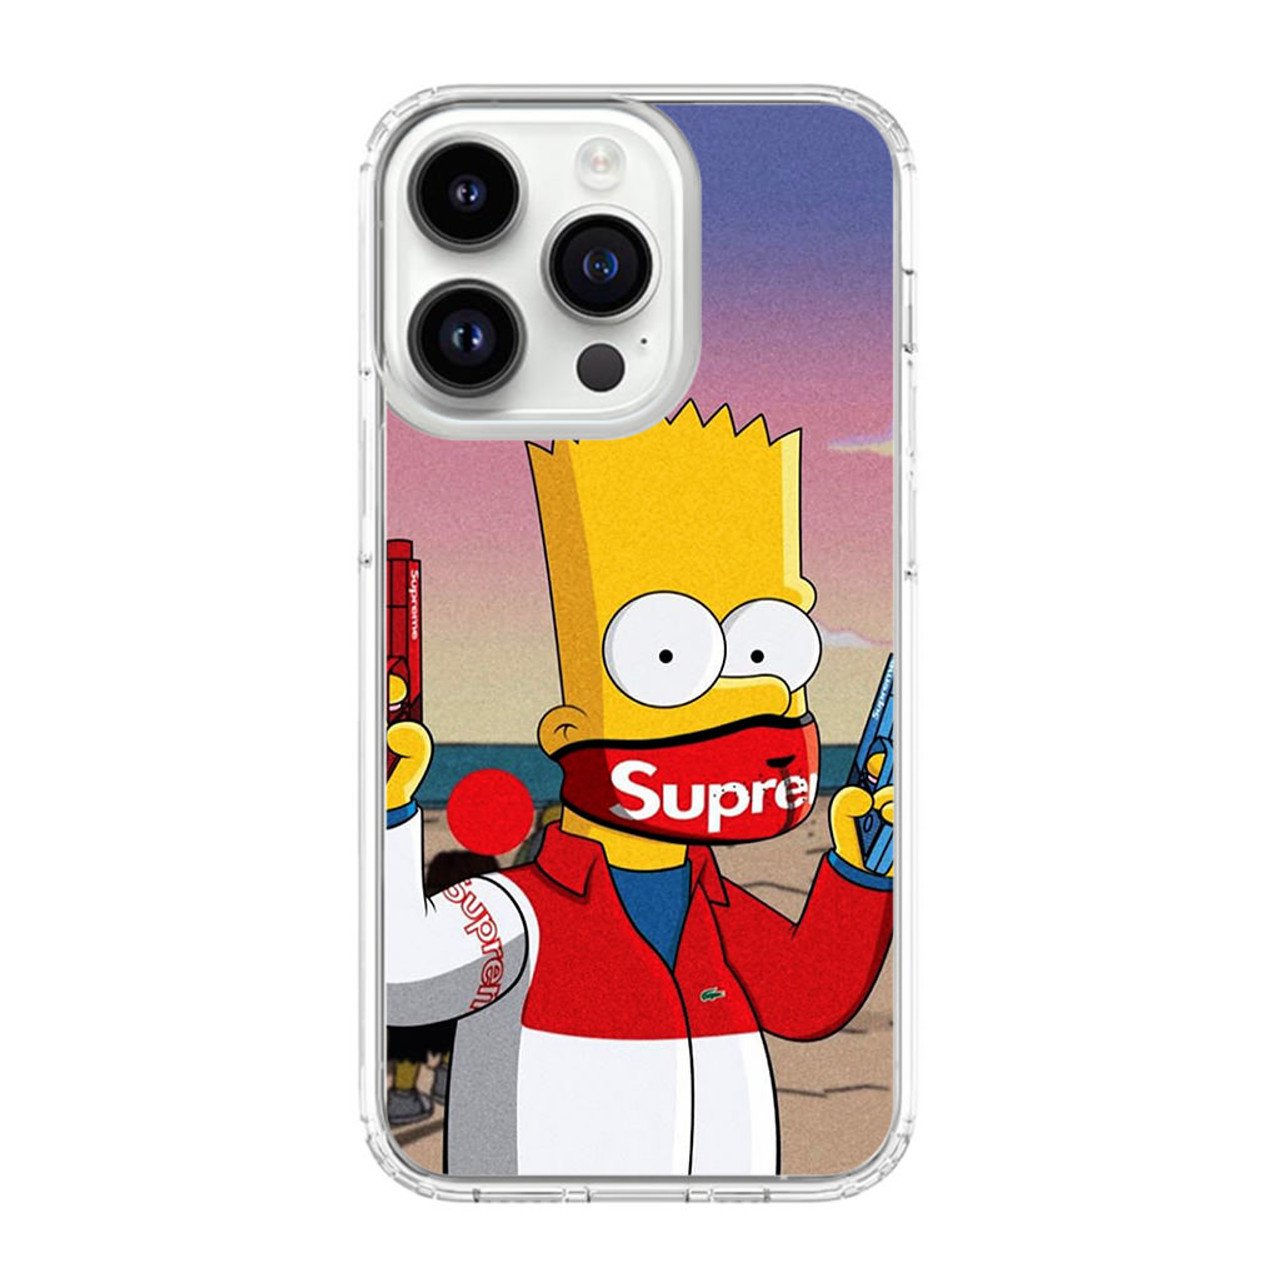 Supreme iPhone XS case designer iphone XS MAX case cartoon red